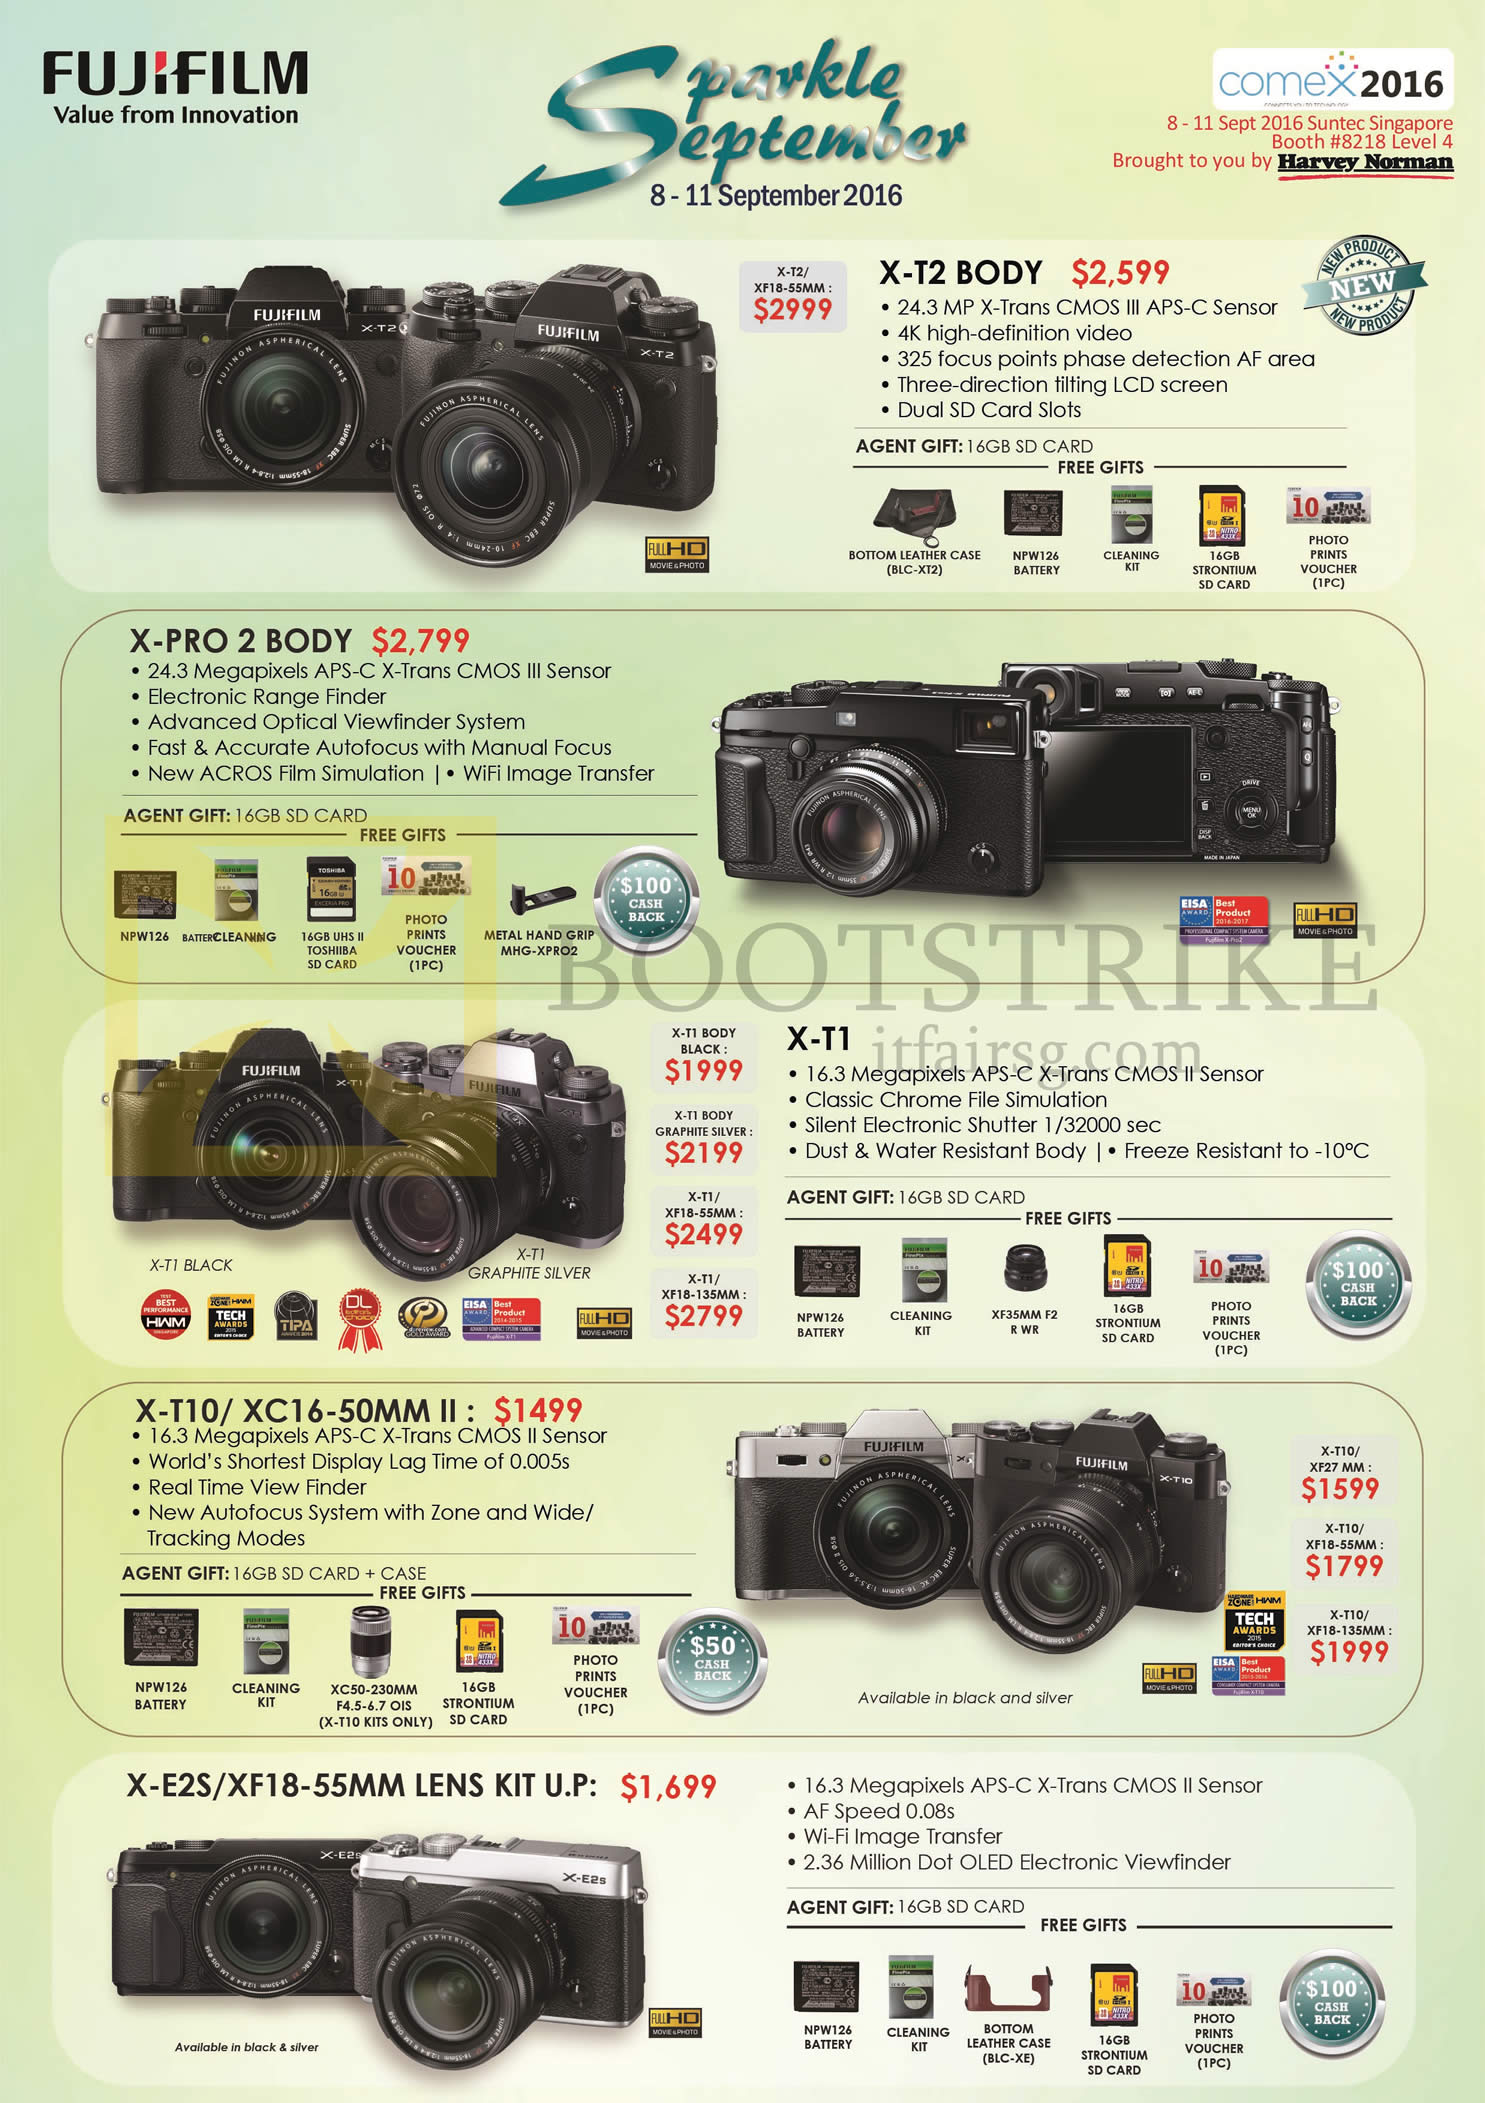 COMEX 2016 price list image brochure of Fujifilm Digital Cameras X-T2, X-PRO 2, X-T1, X-T10, X-E2S